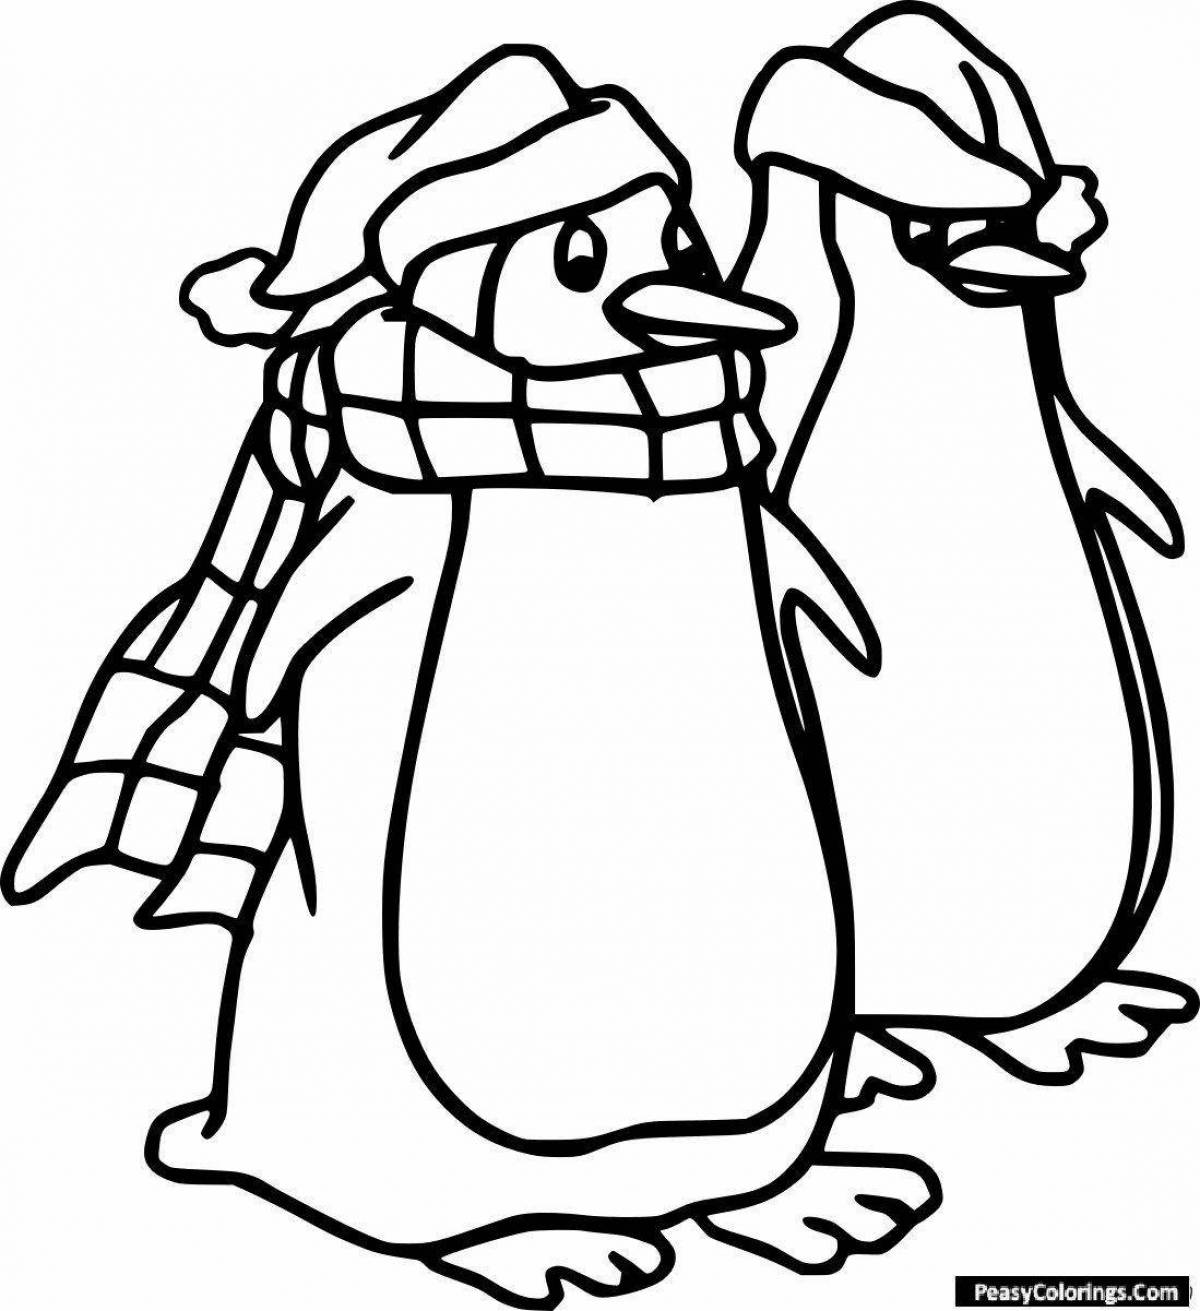 Cute penguin in a hat